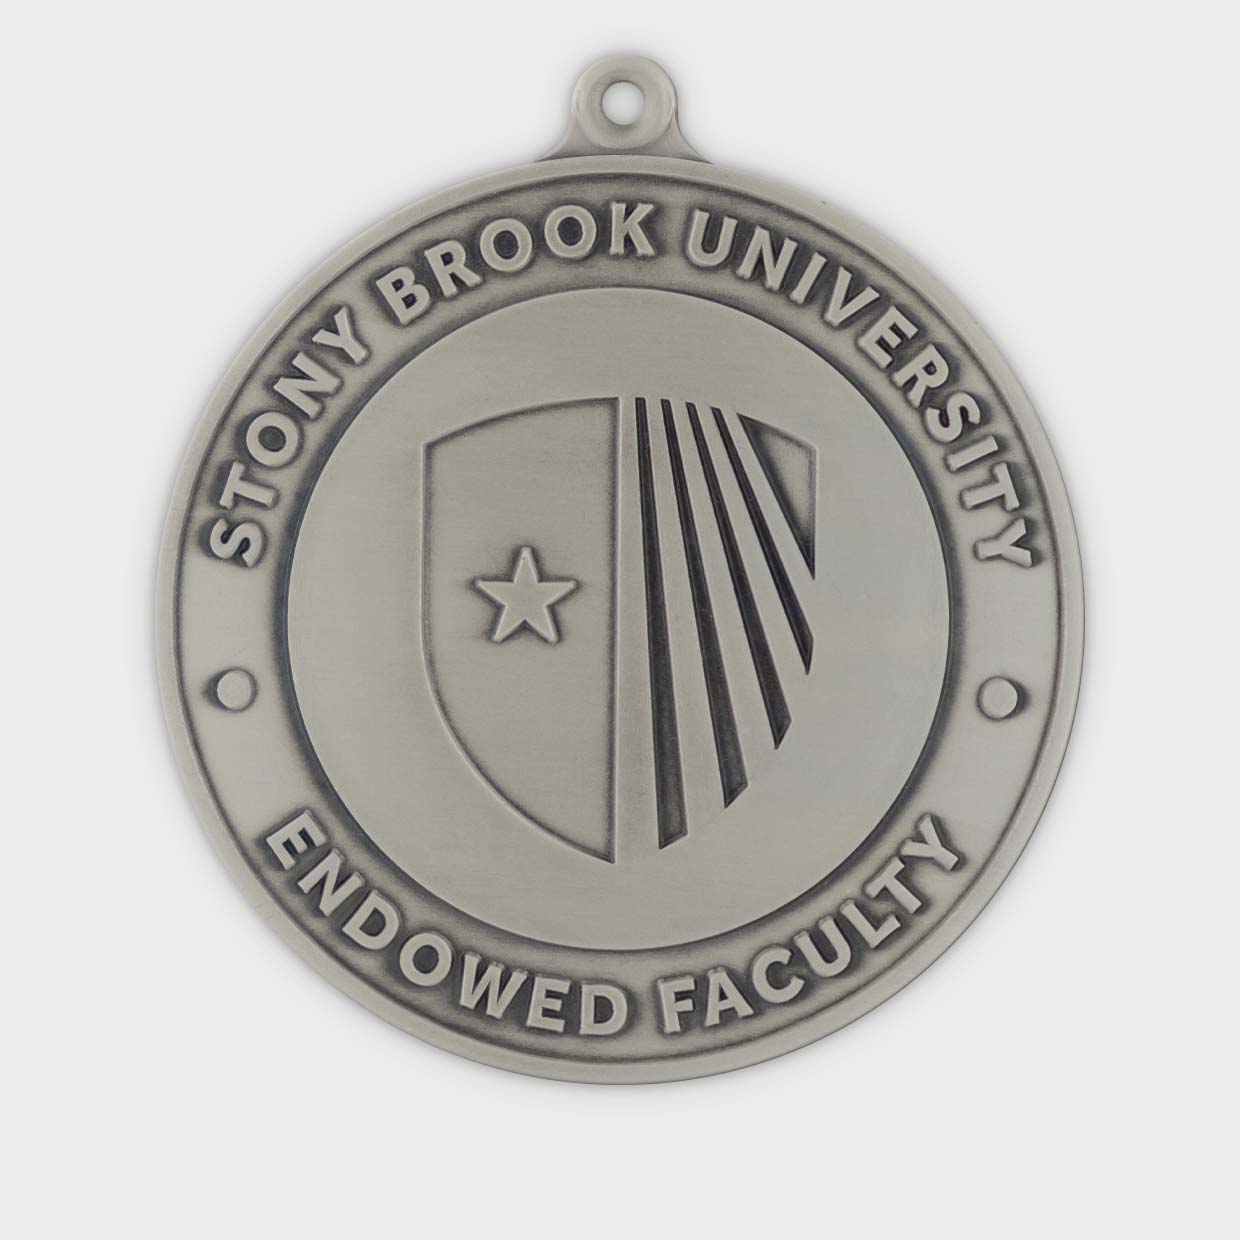 Endowed Faculty Medal Obverse